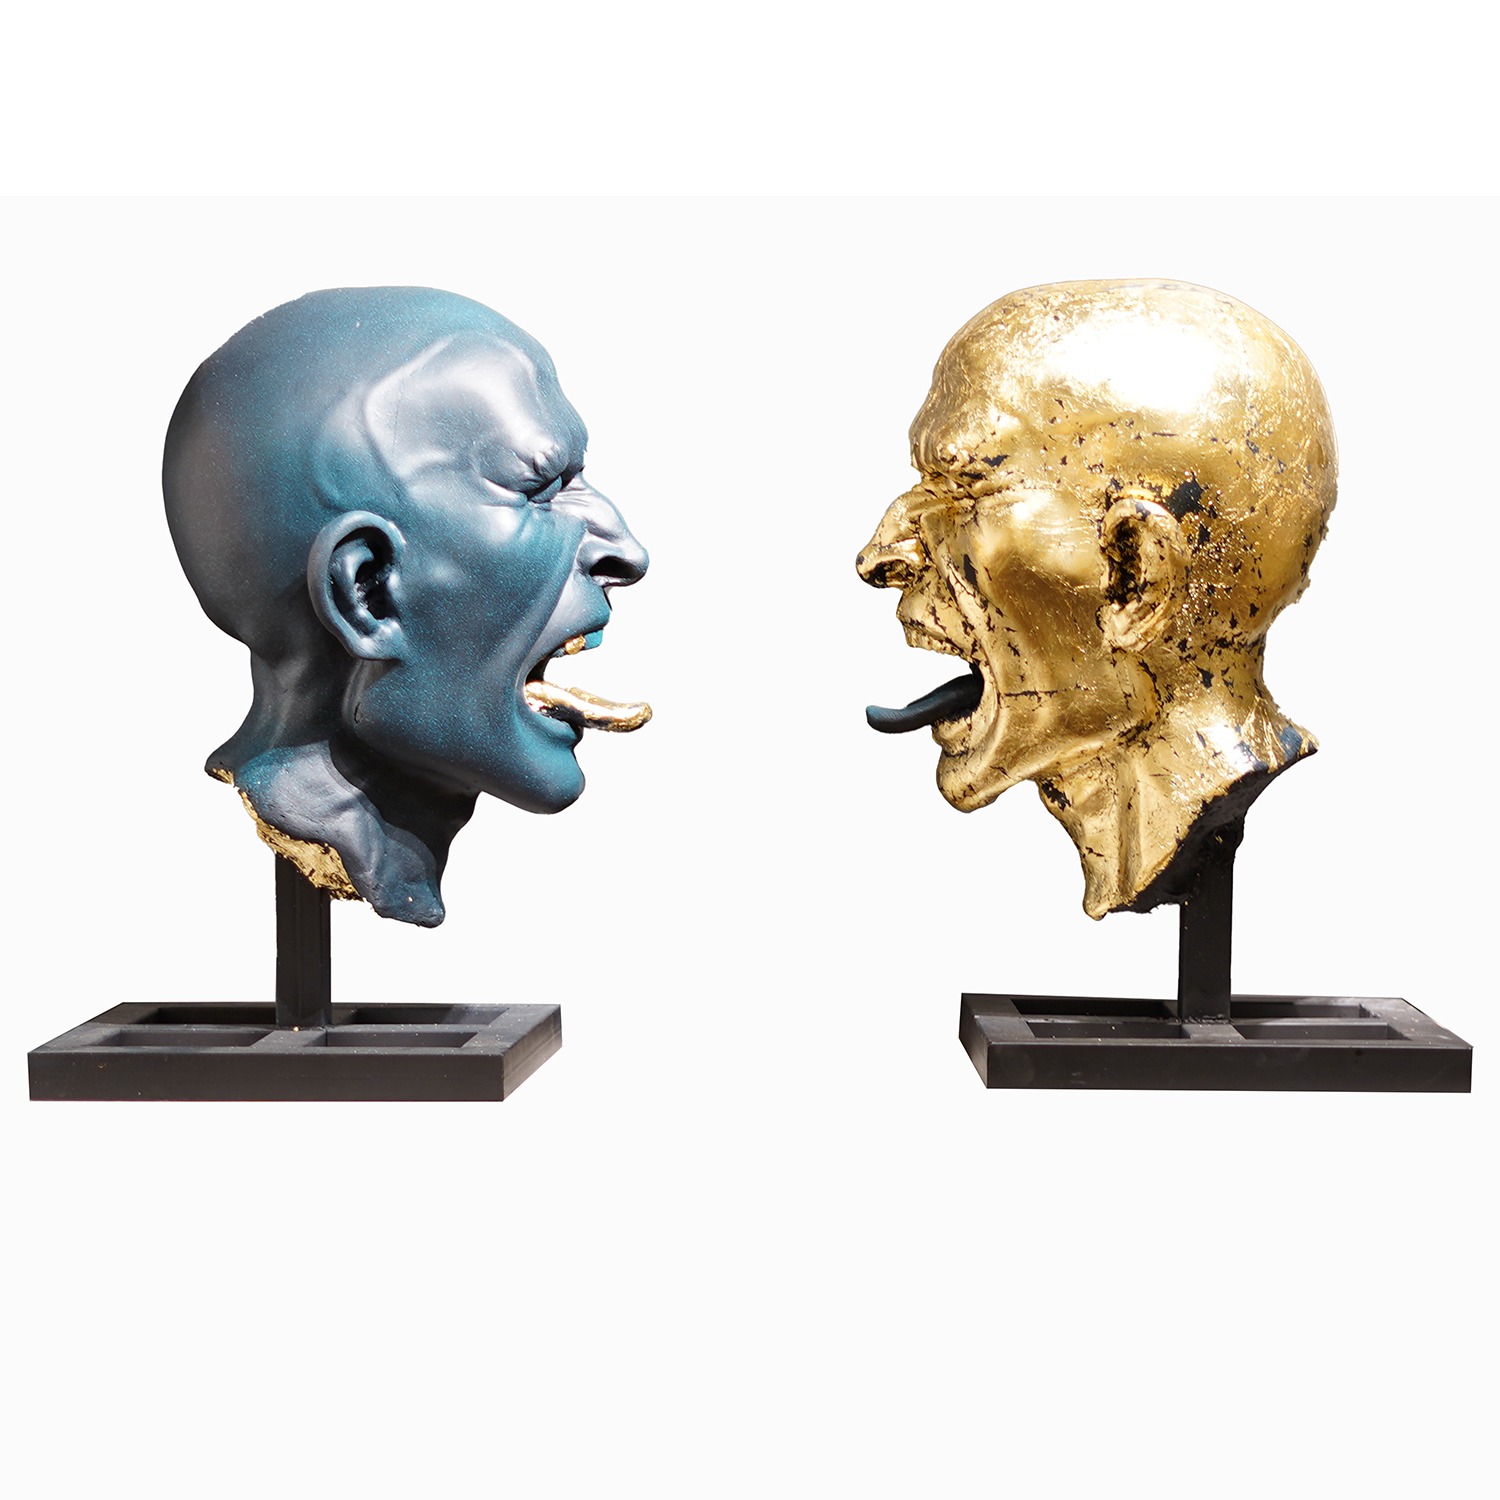 Title: Tongue Tete-a-tete/ Wispering Reflection<br> Medium: Fiber Glass, Gold Leaf, Iron Pedestal<br> Size: 24 x 14 In